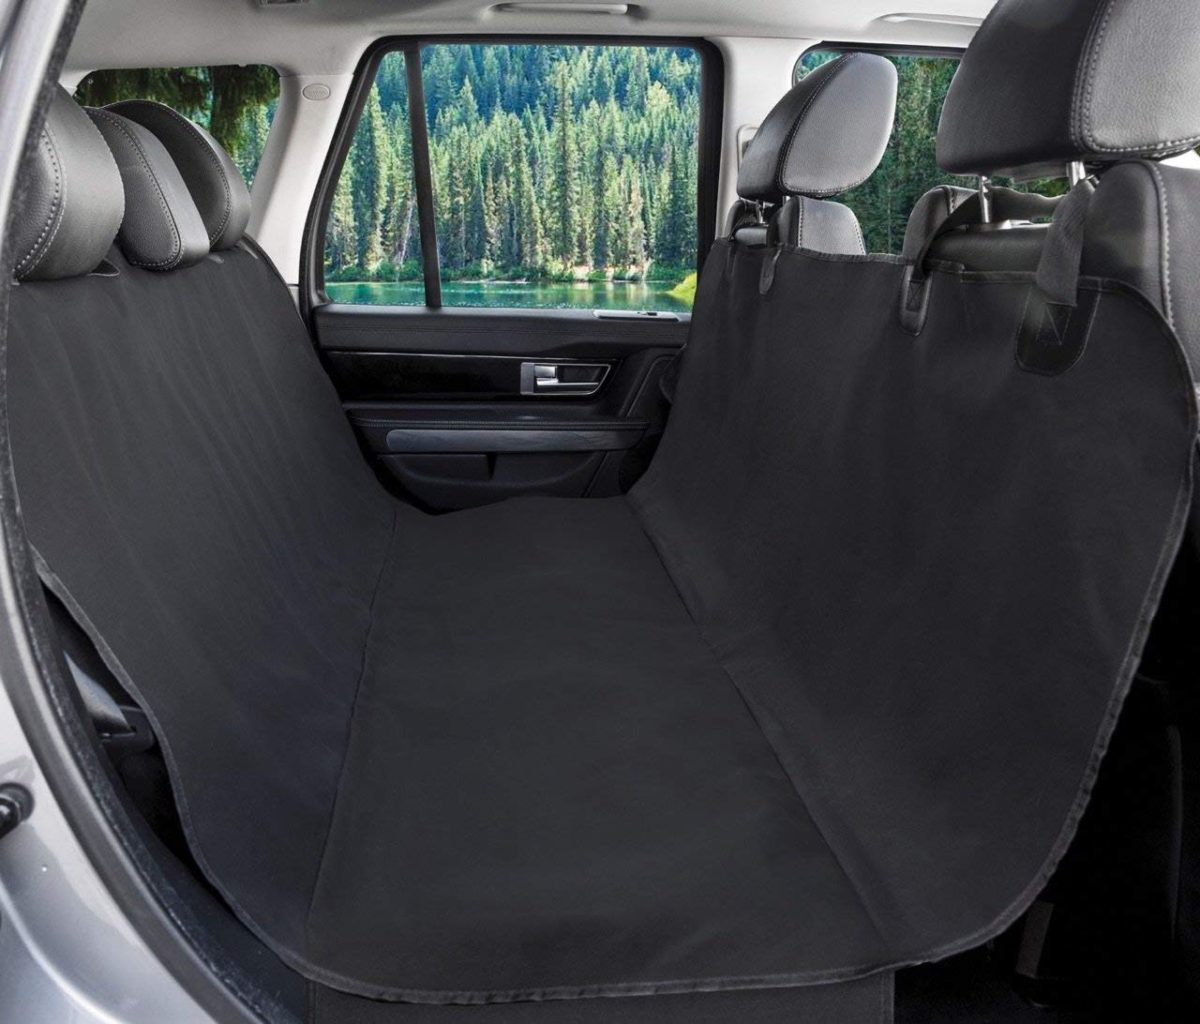 WaterProof & Hammock Convertible Pet Seat Cover for Cars